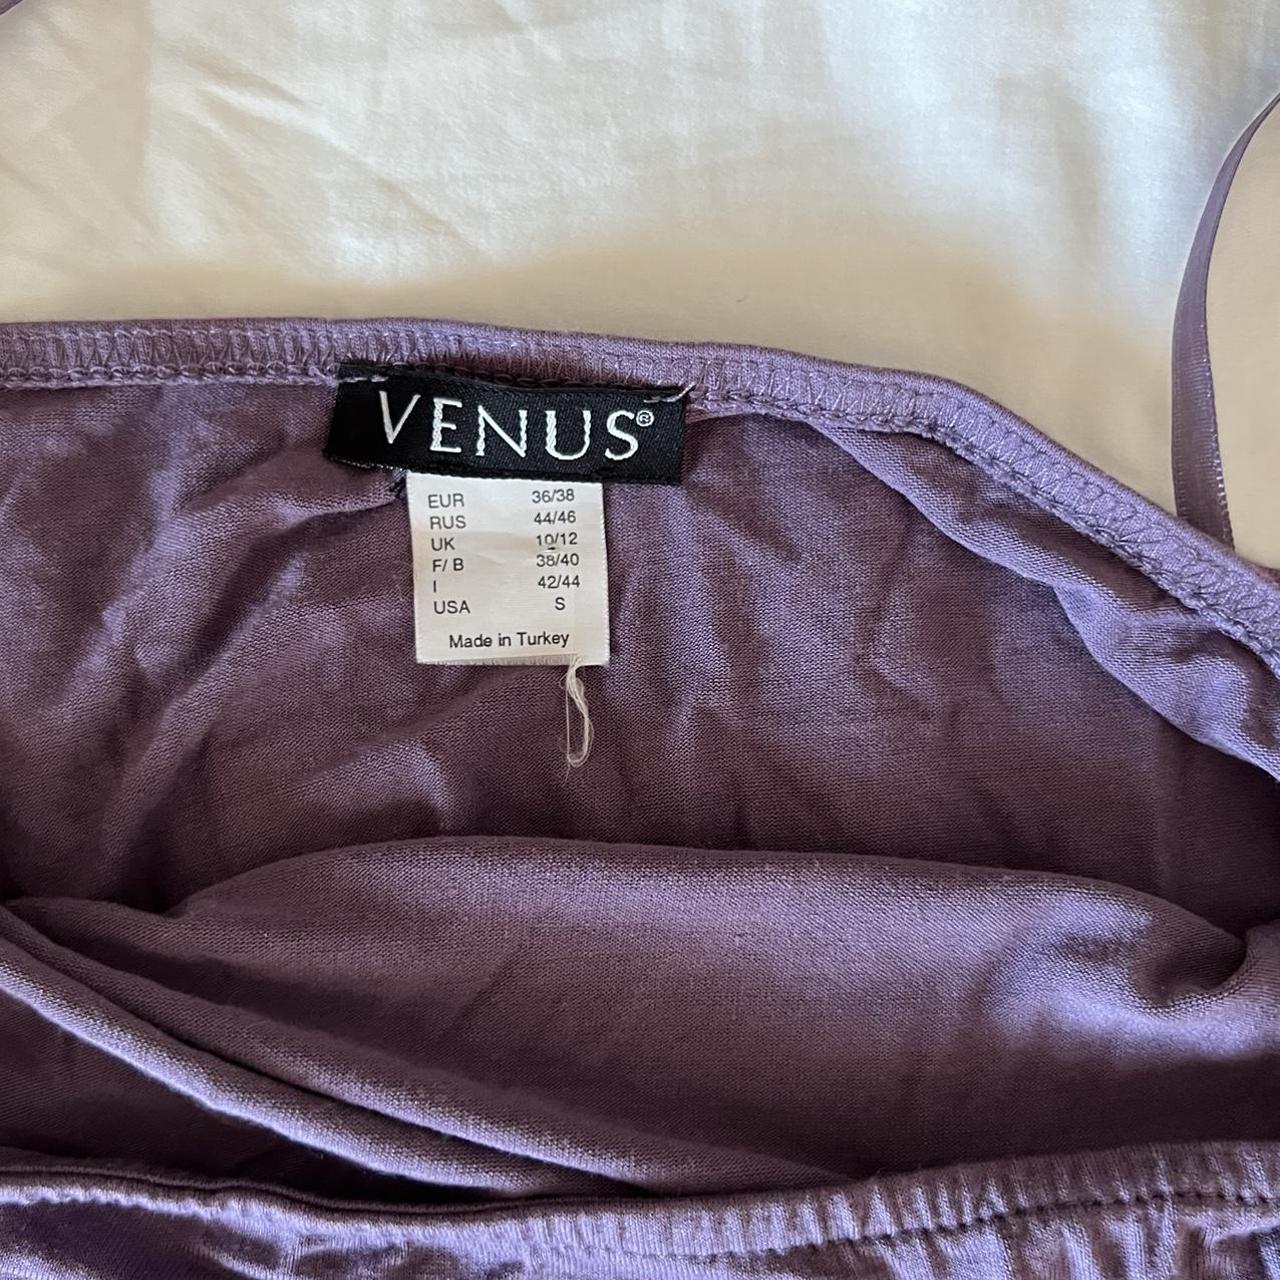 Venus Women's Purple and Silver Top | Depop